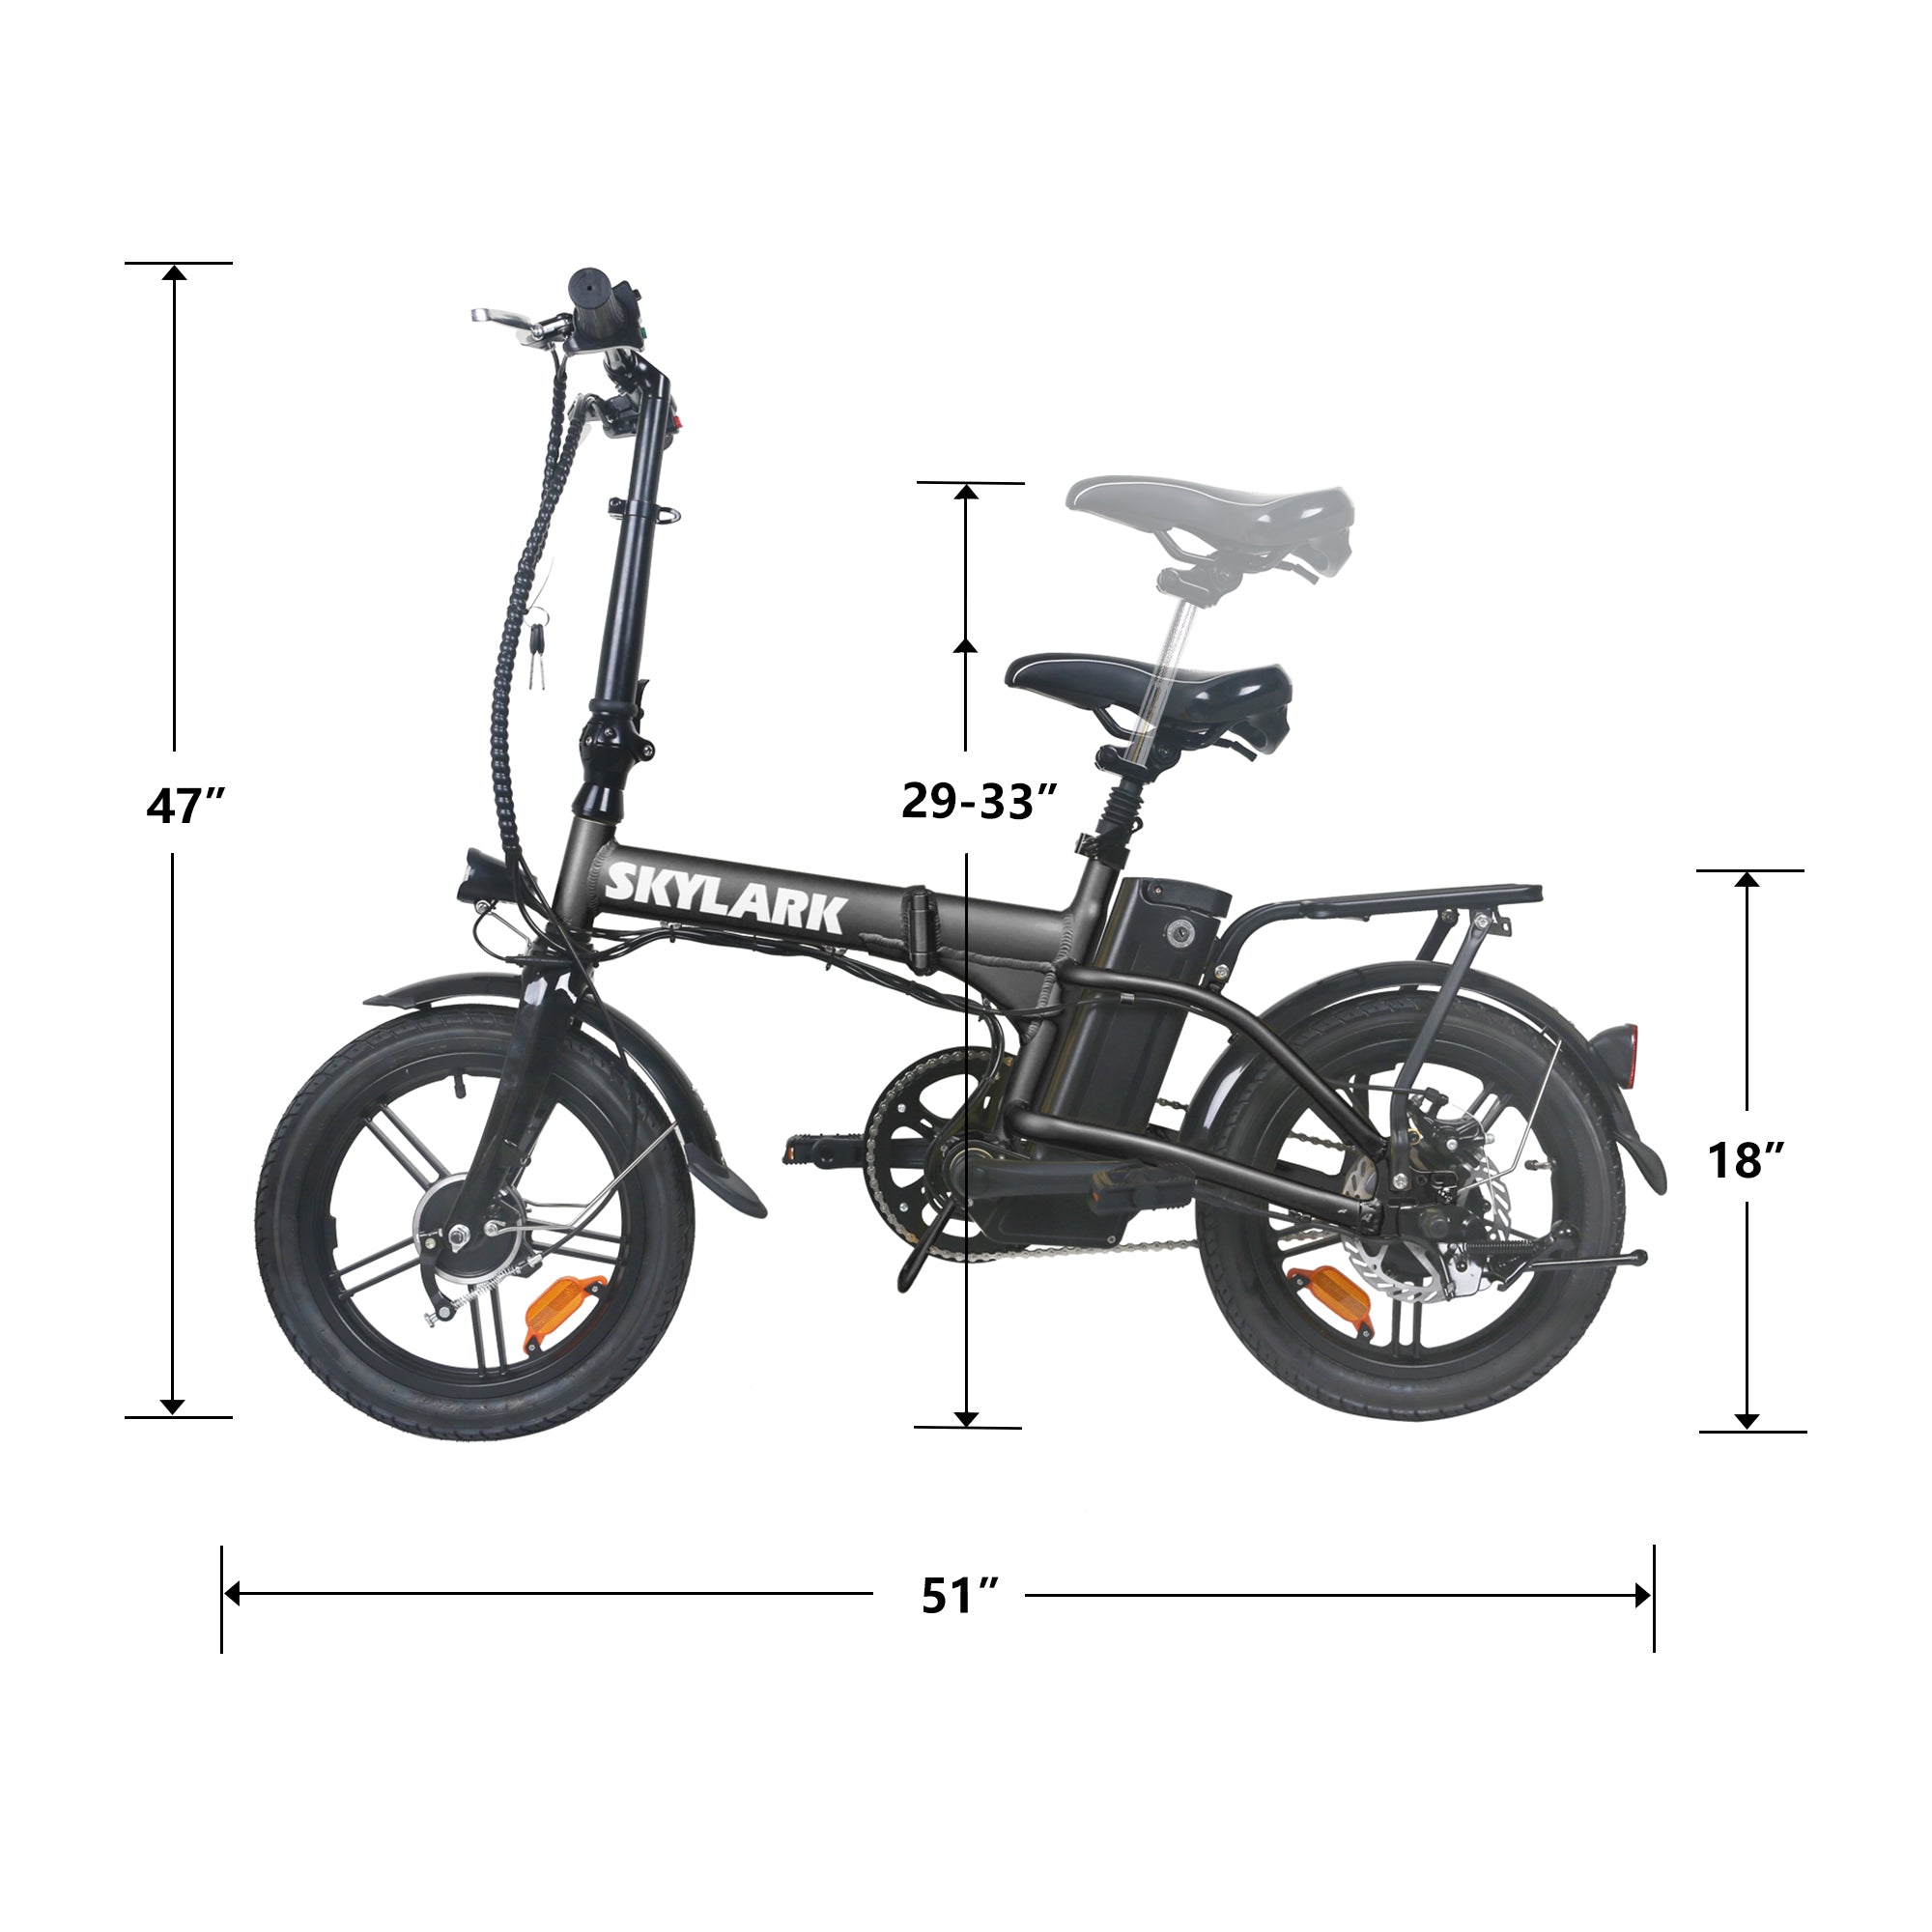 NAKTO 16“ Skylark Electric Bike A020100018